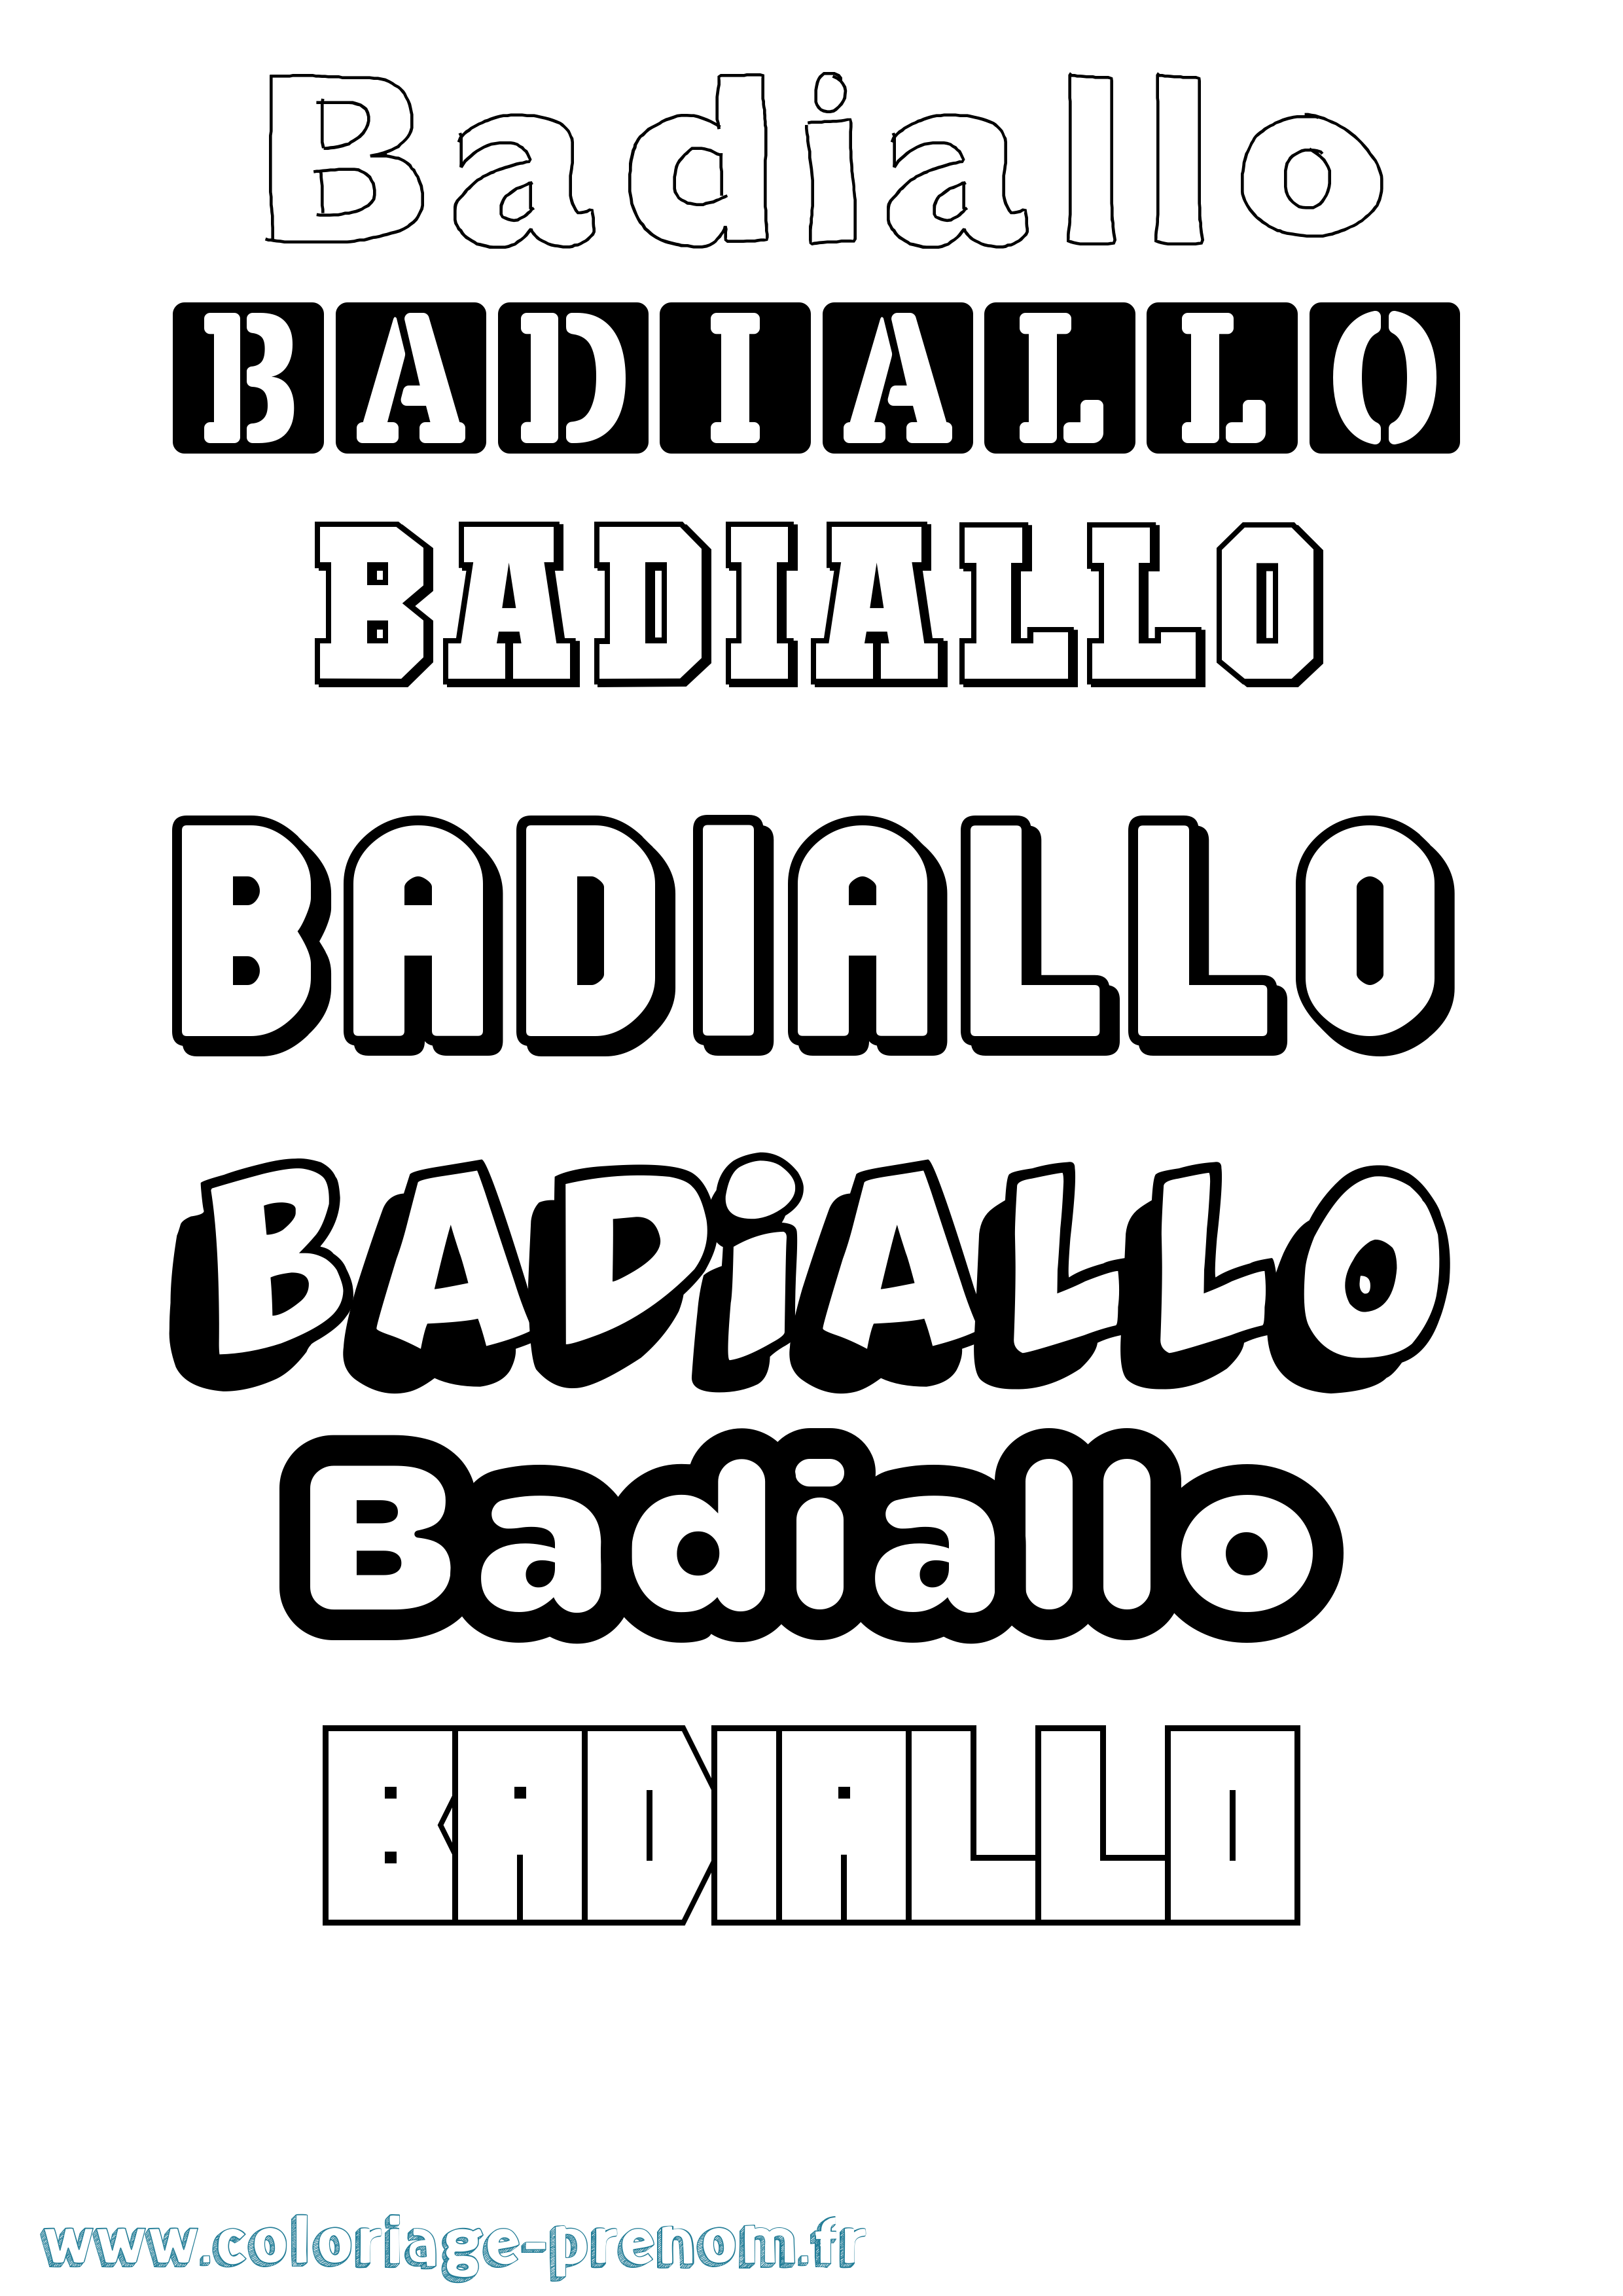 Coloriage prénom Badiallo Simple